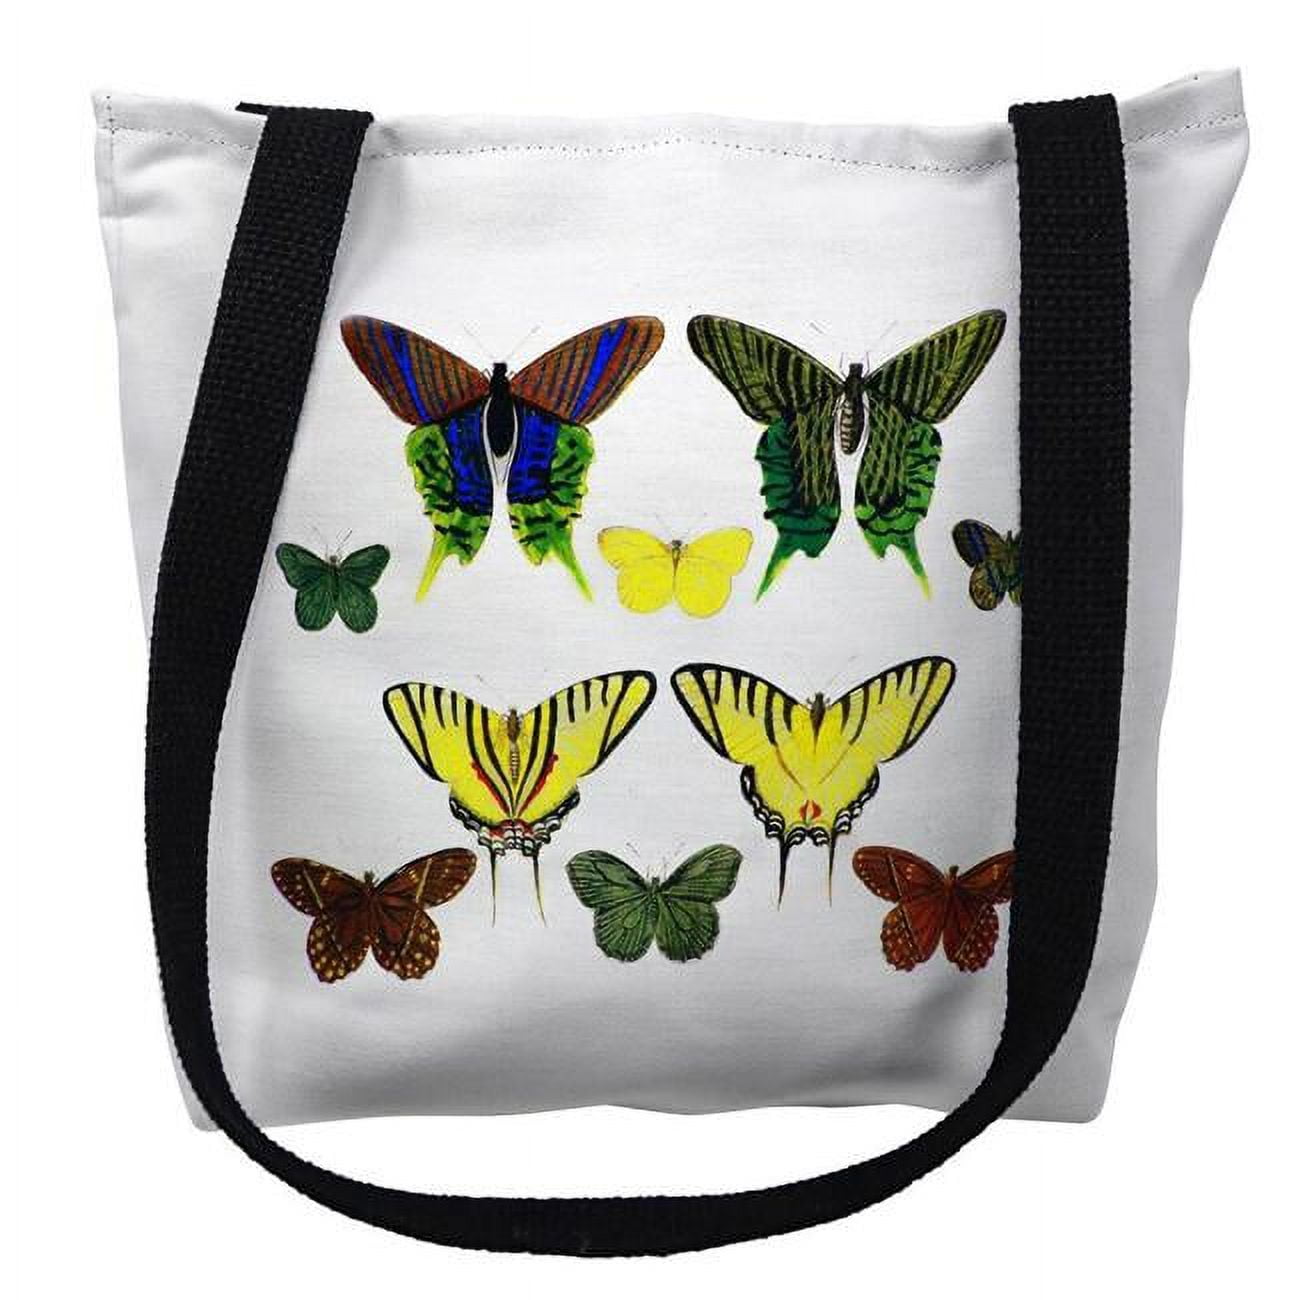 Ty028apm 16 X 16 In. Green Butterflies Tote Bag - Medium